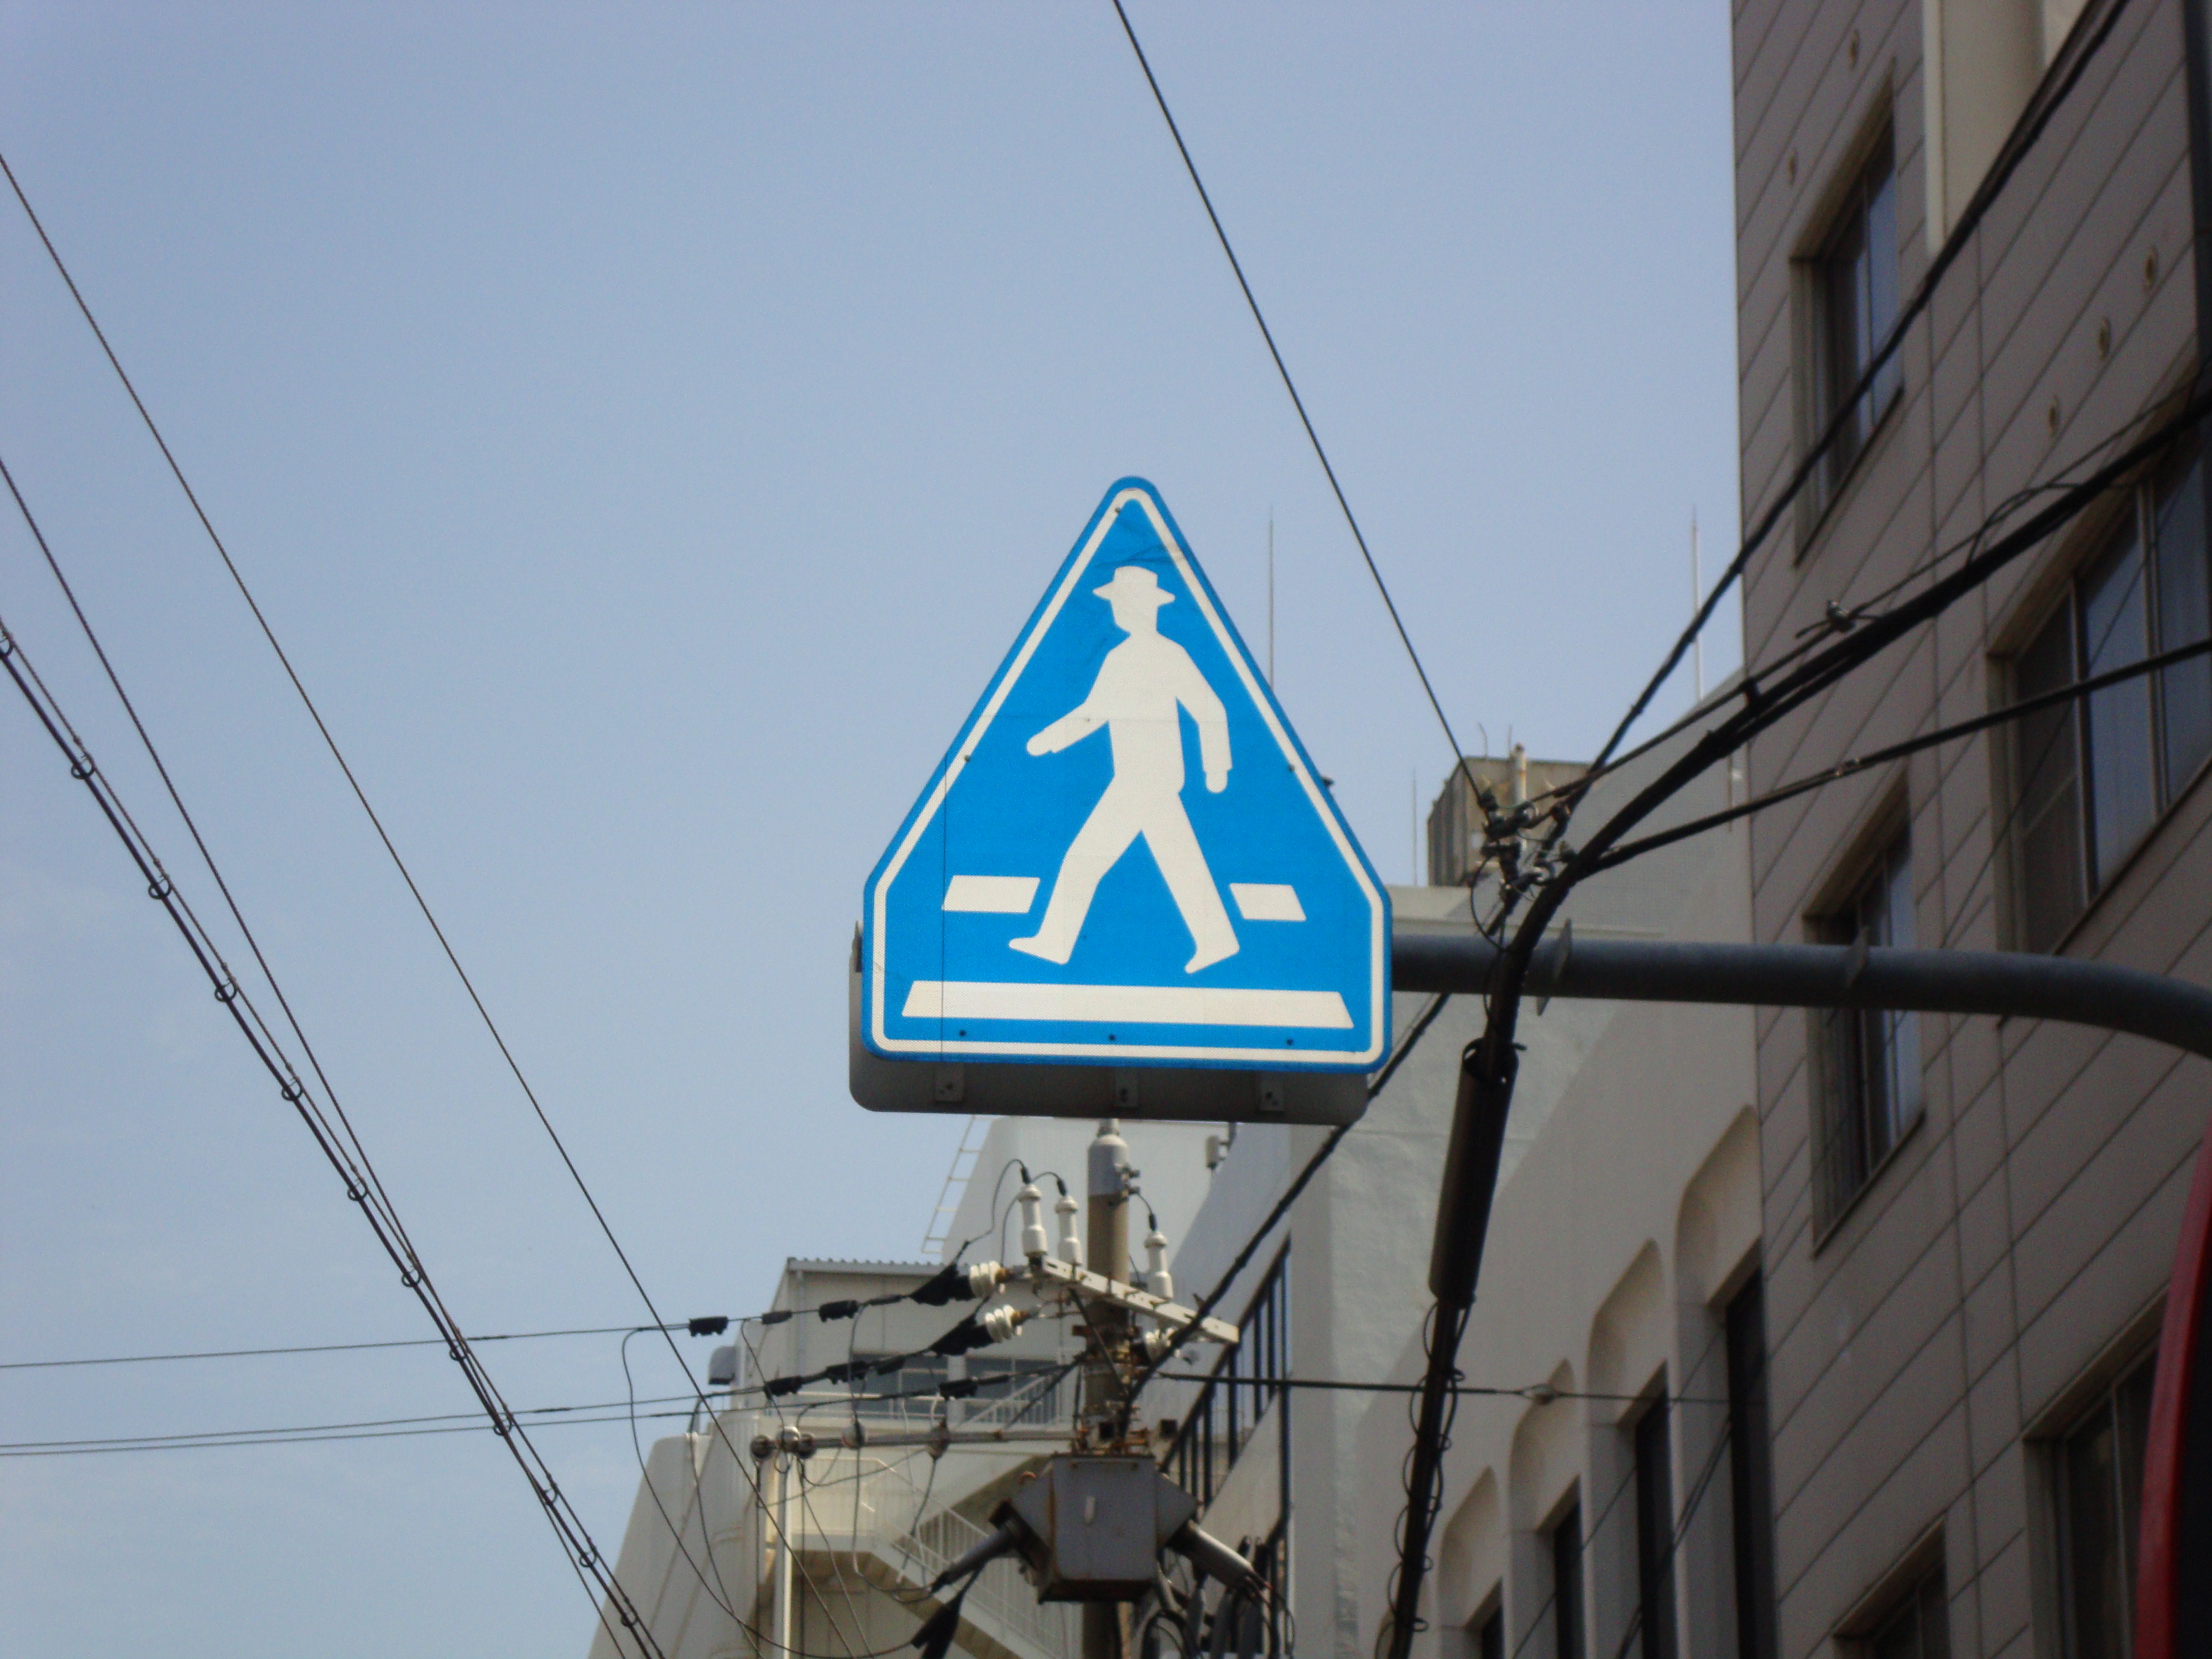 "Walk" sign